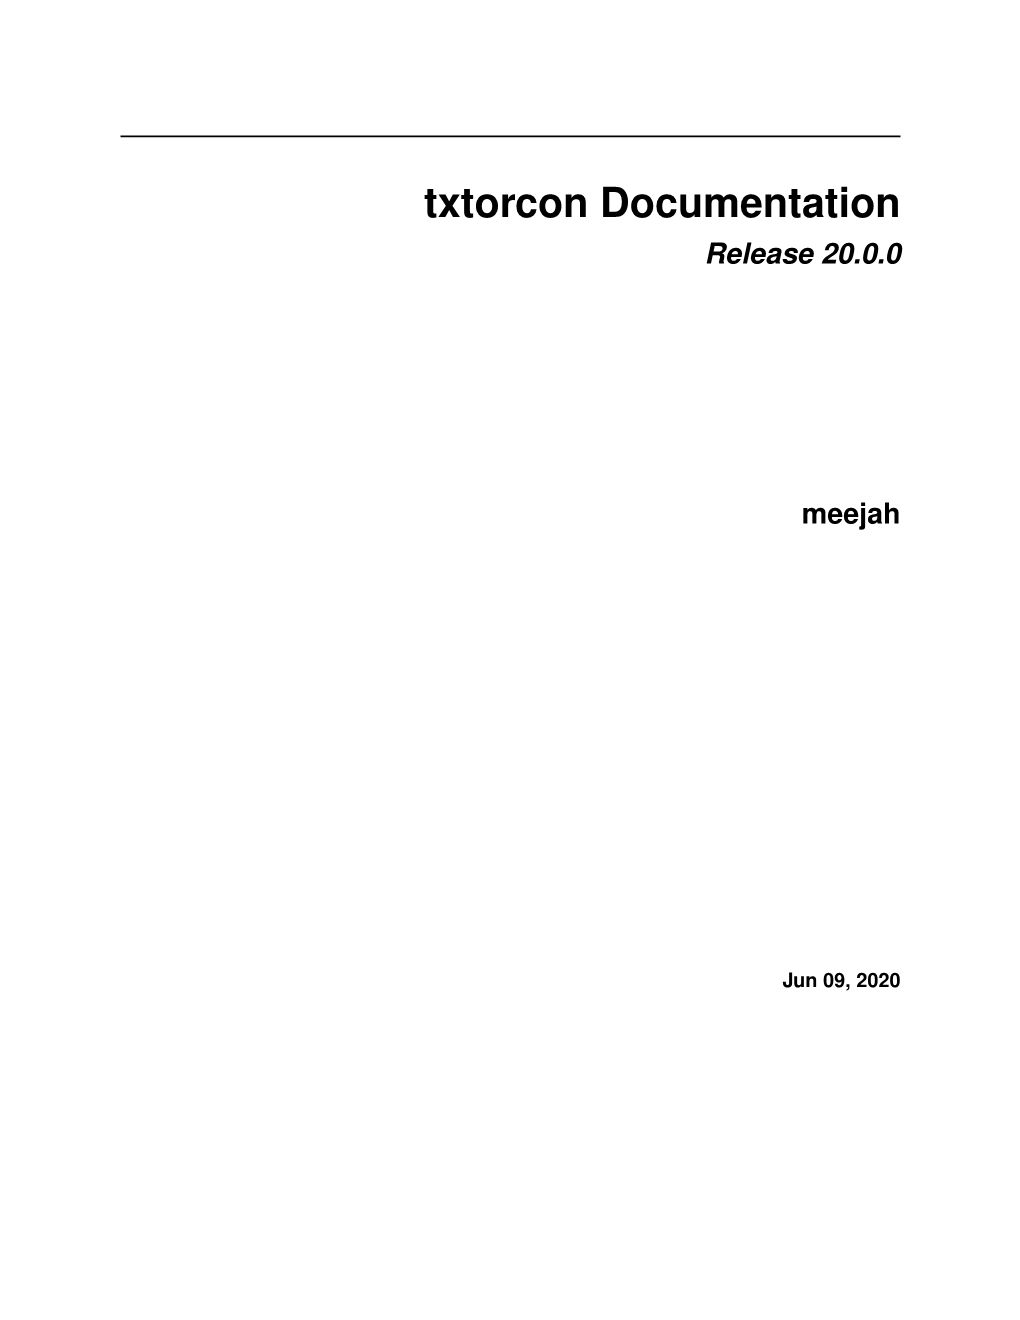 Txtorcon Documentation Release 20.0.0